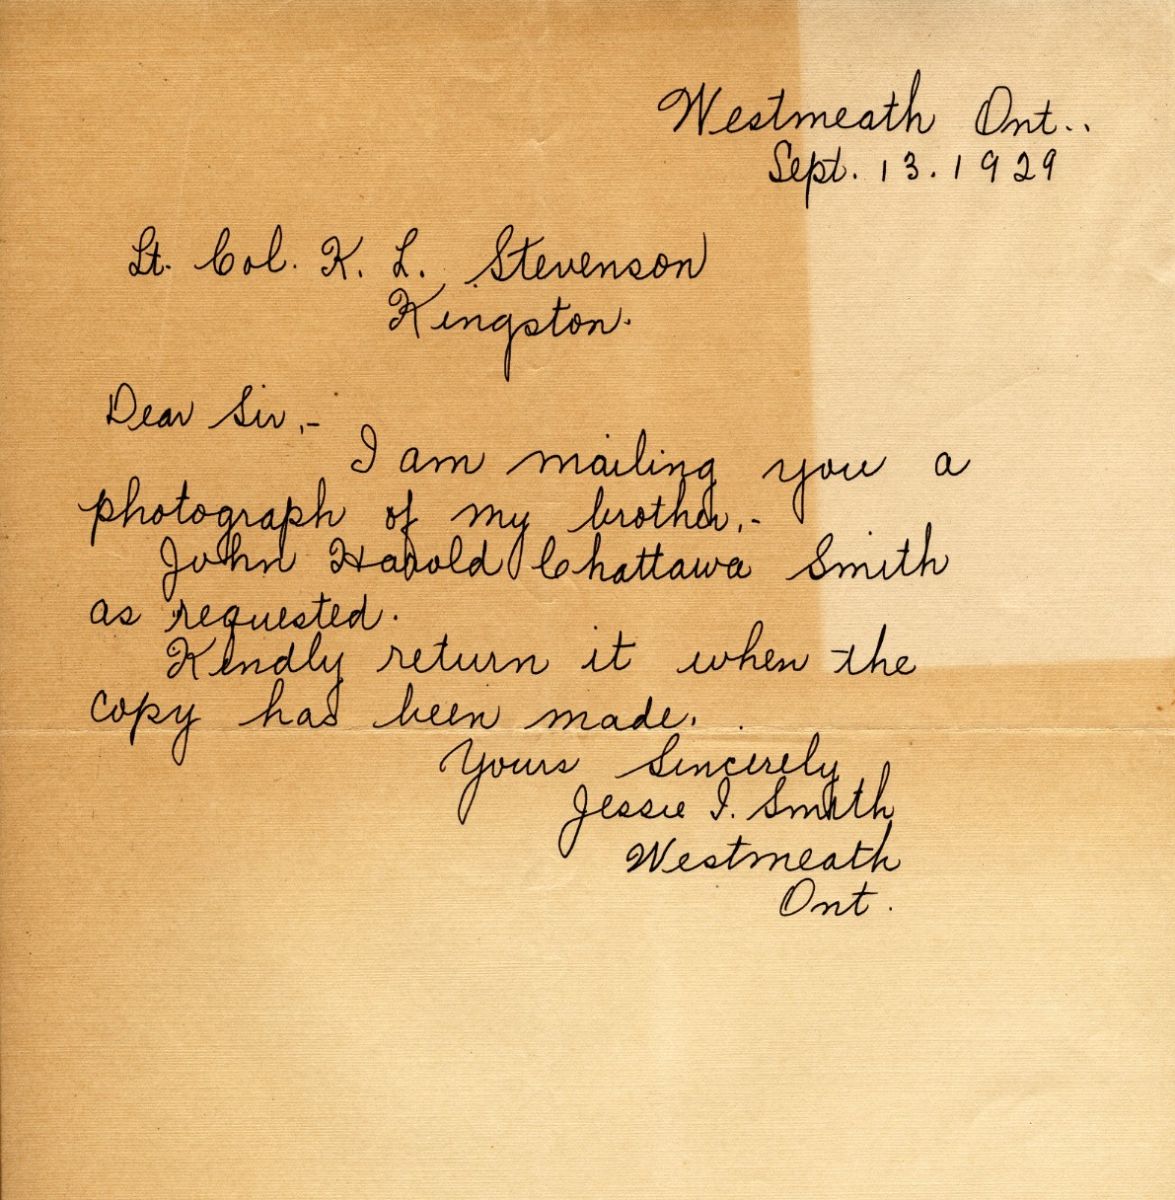 Letter from Jesse J. Smith to Lt. Col. K.L Stevenson, 13th September 1929